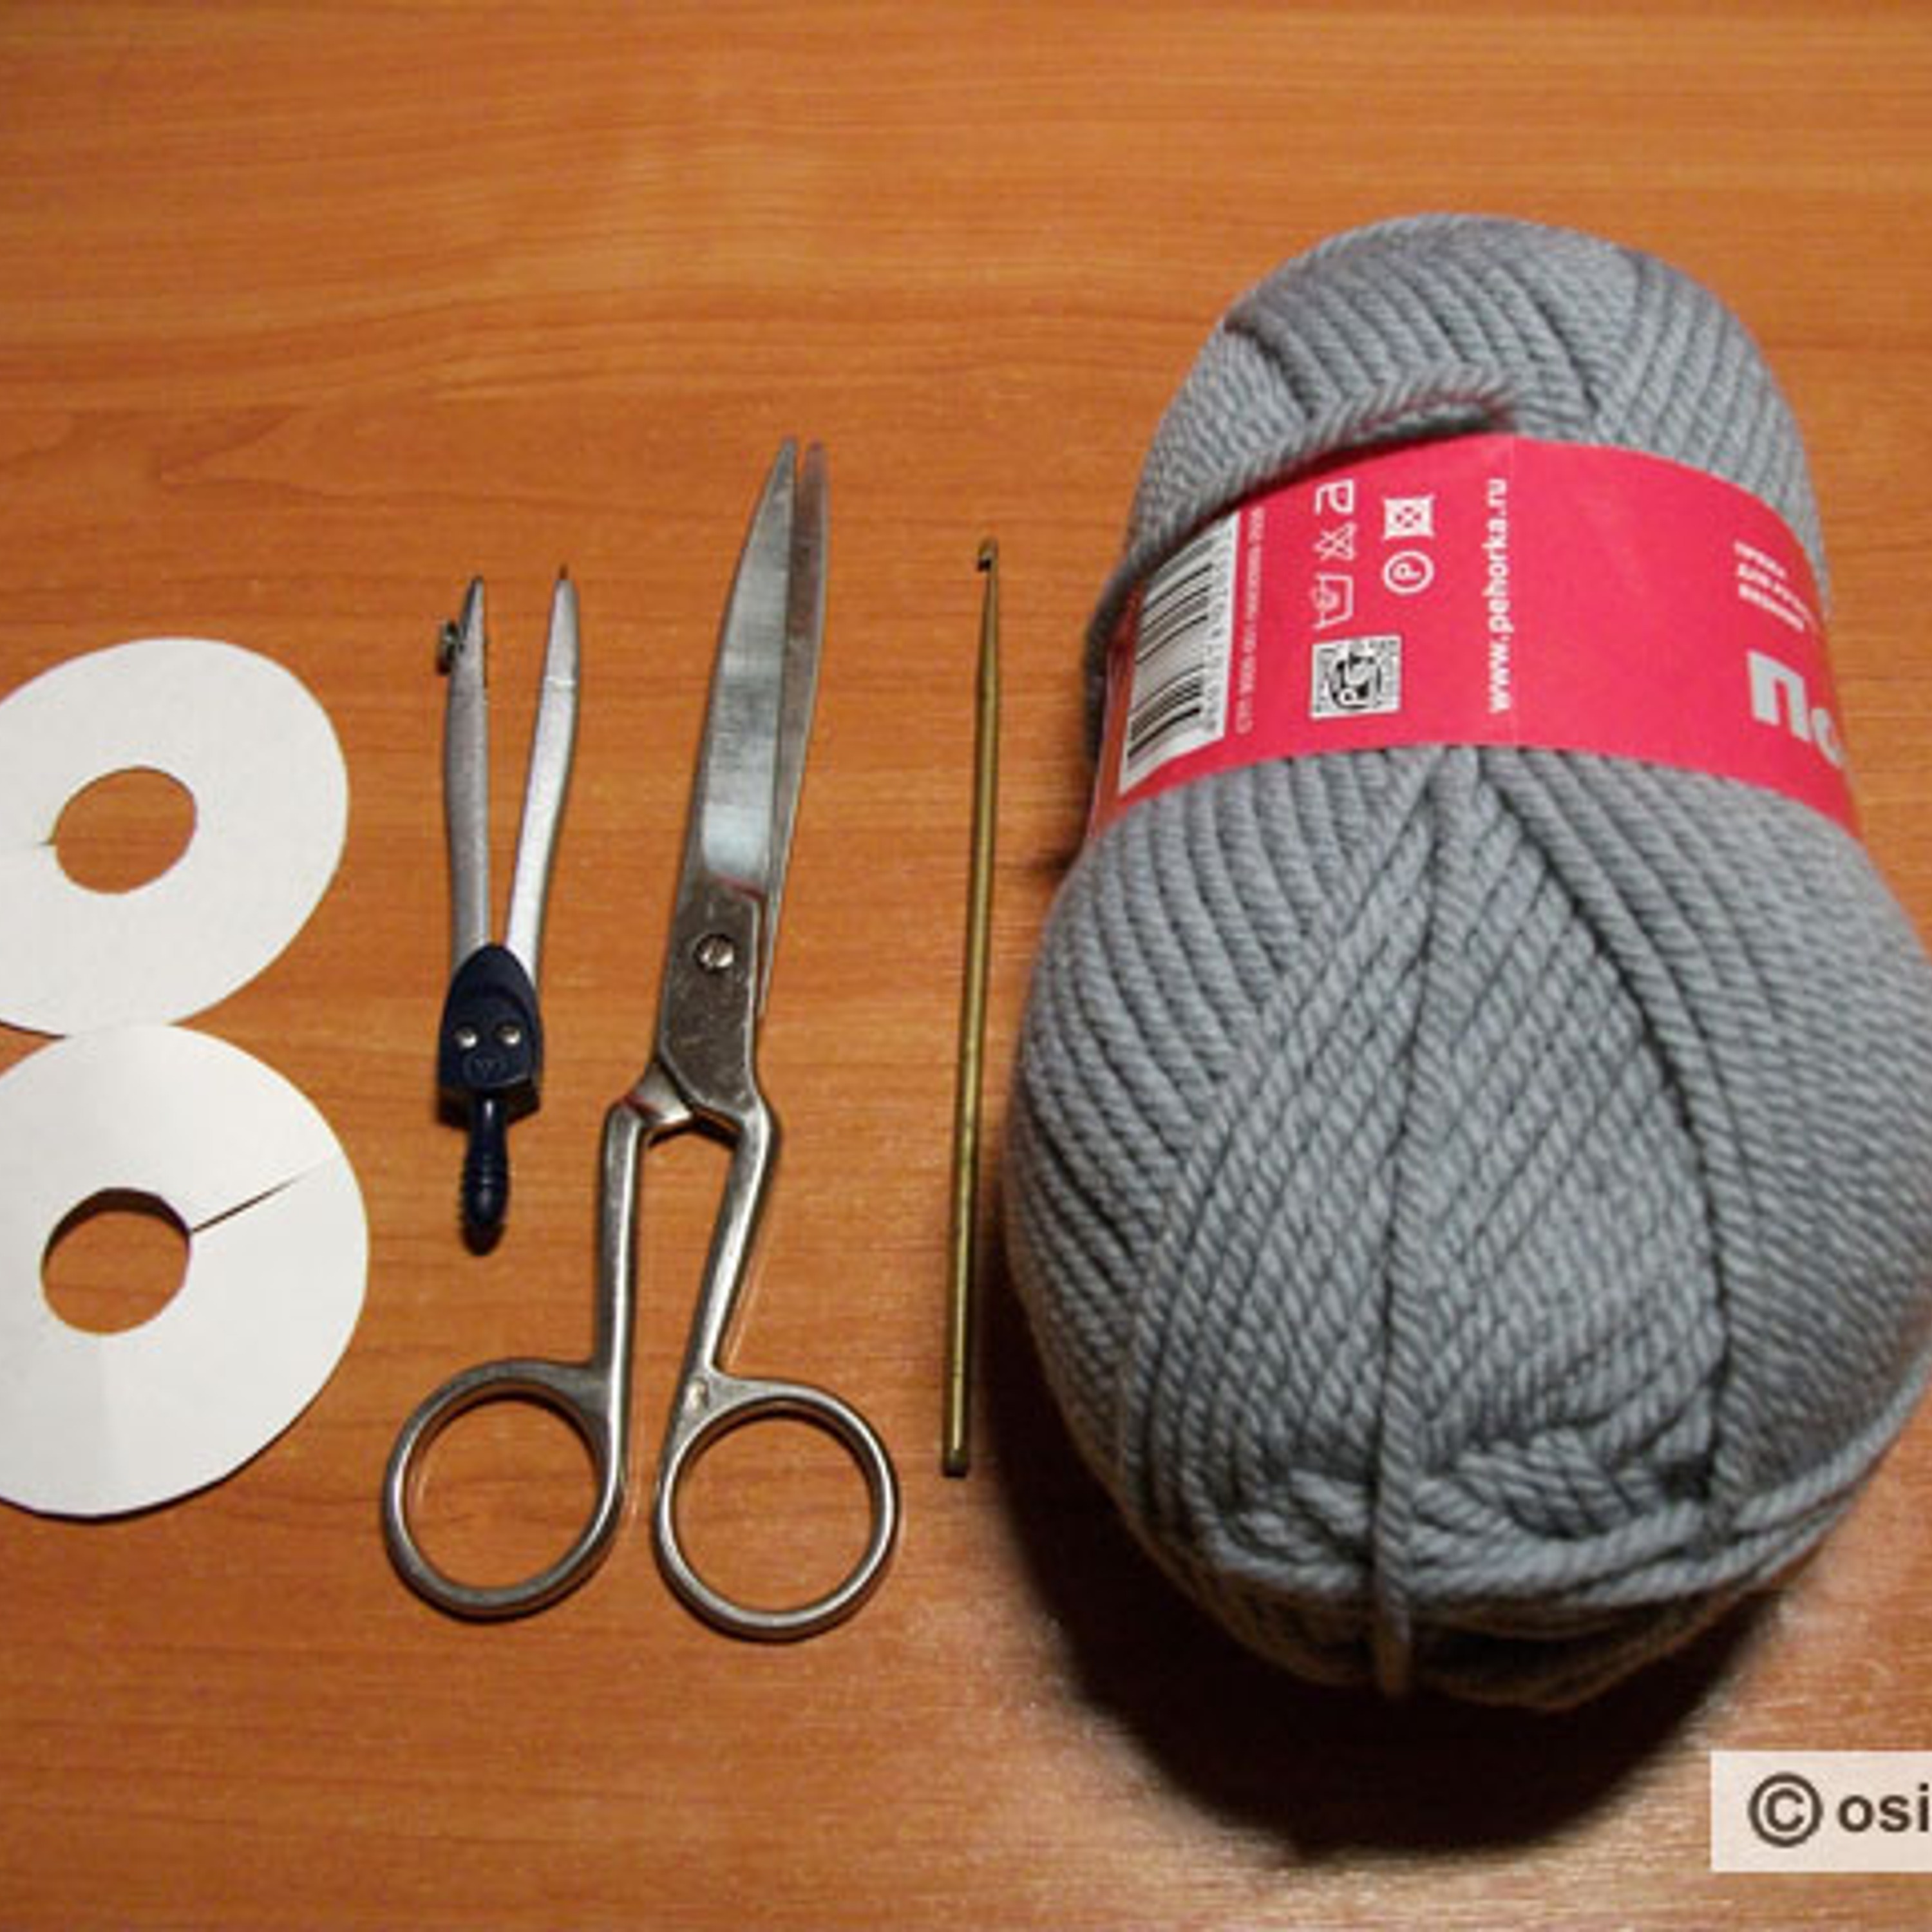 Материал: крючок № 3, 2 шаблона, нитки для вязания 500 гр., циркуль, ножницы.